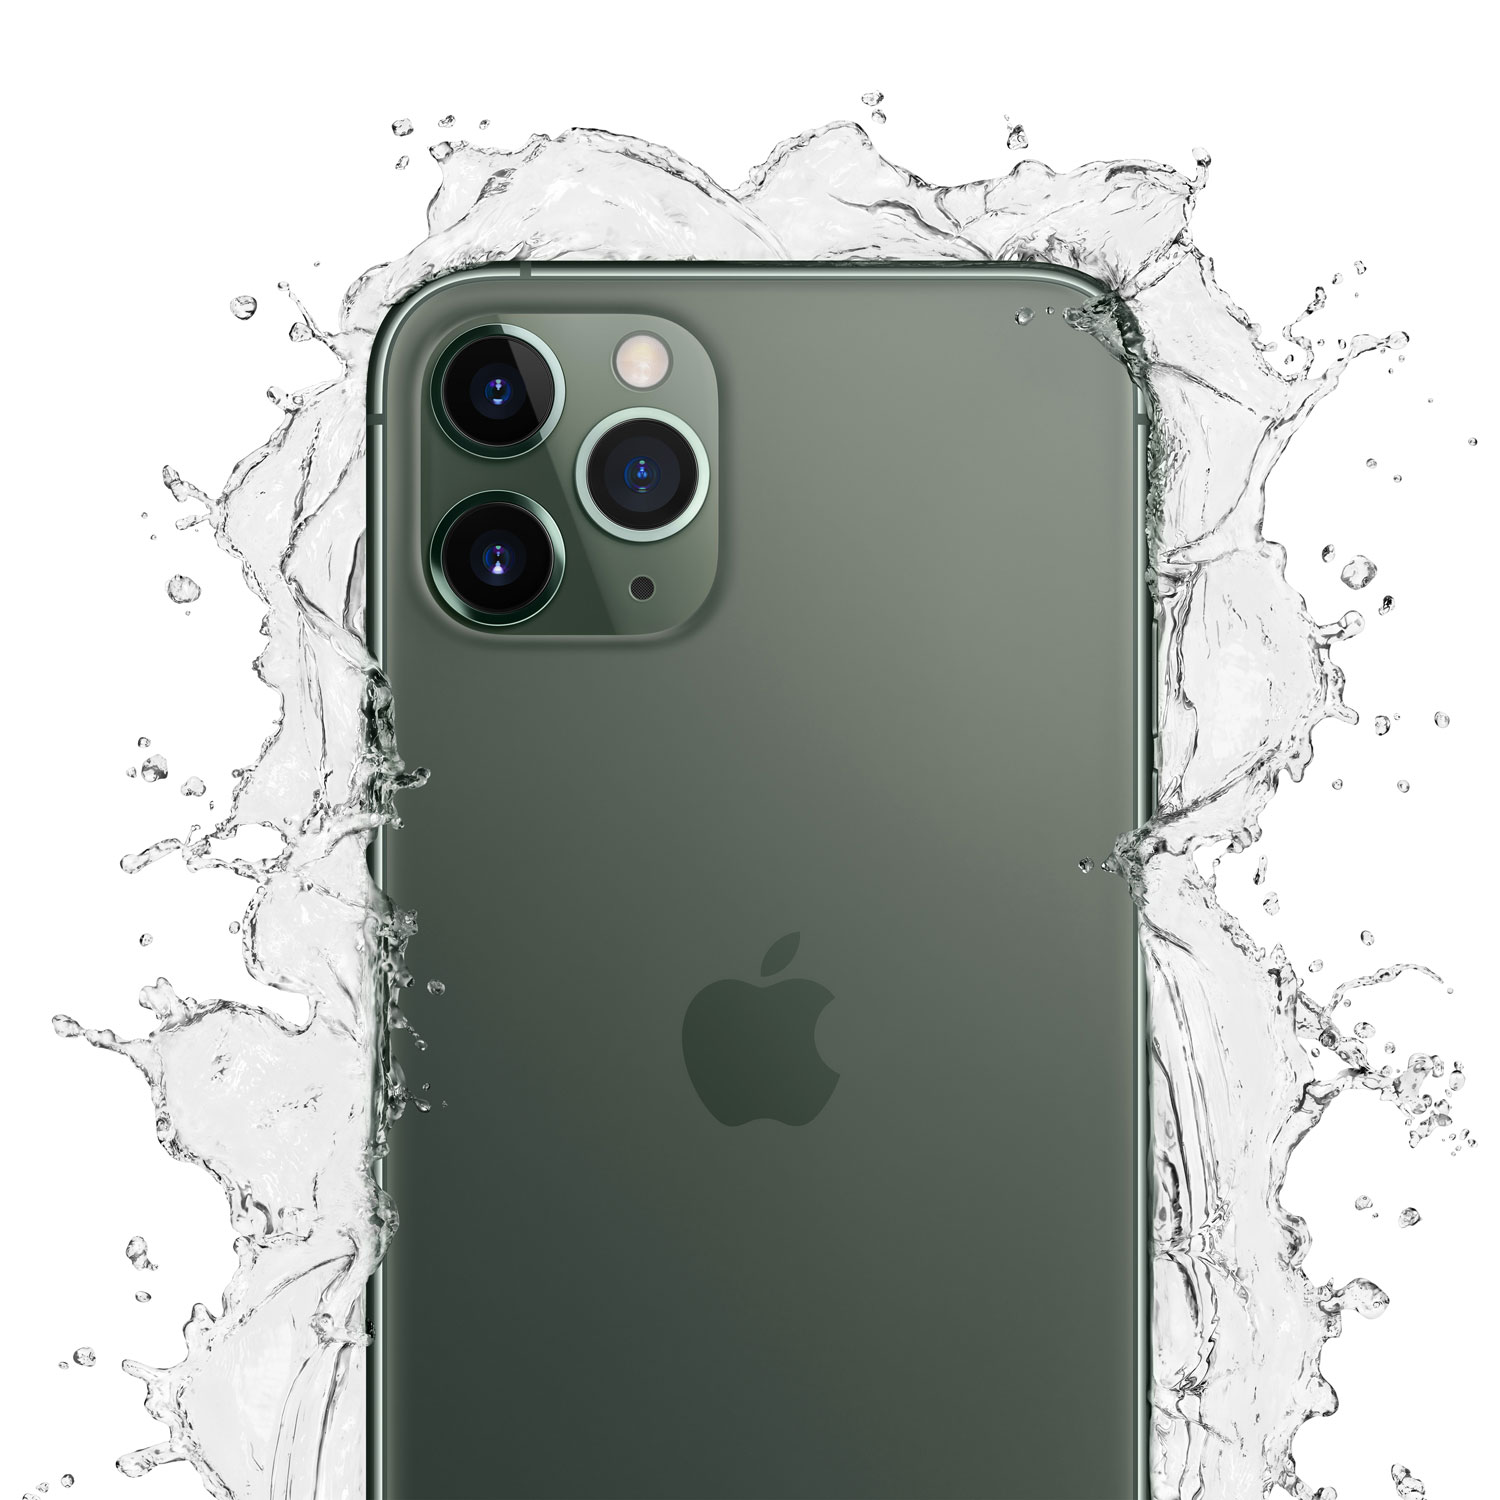 Apple iPhone 11 Pro 512GB - Midnight Green - Unlocked | Best Buy 